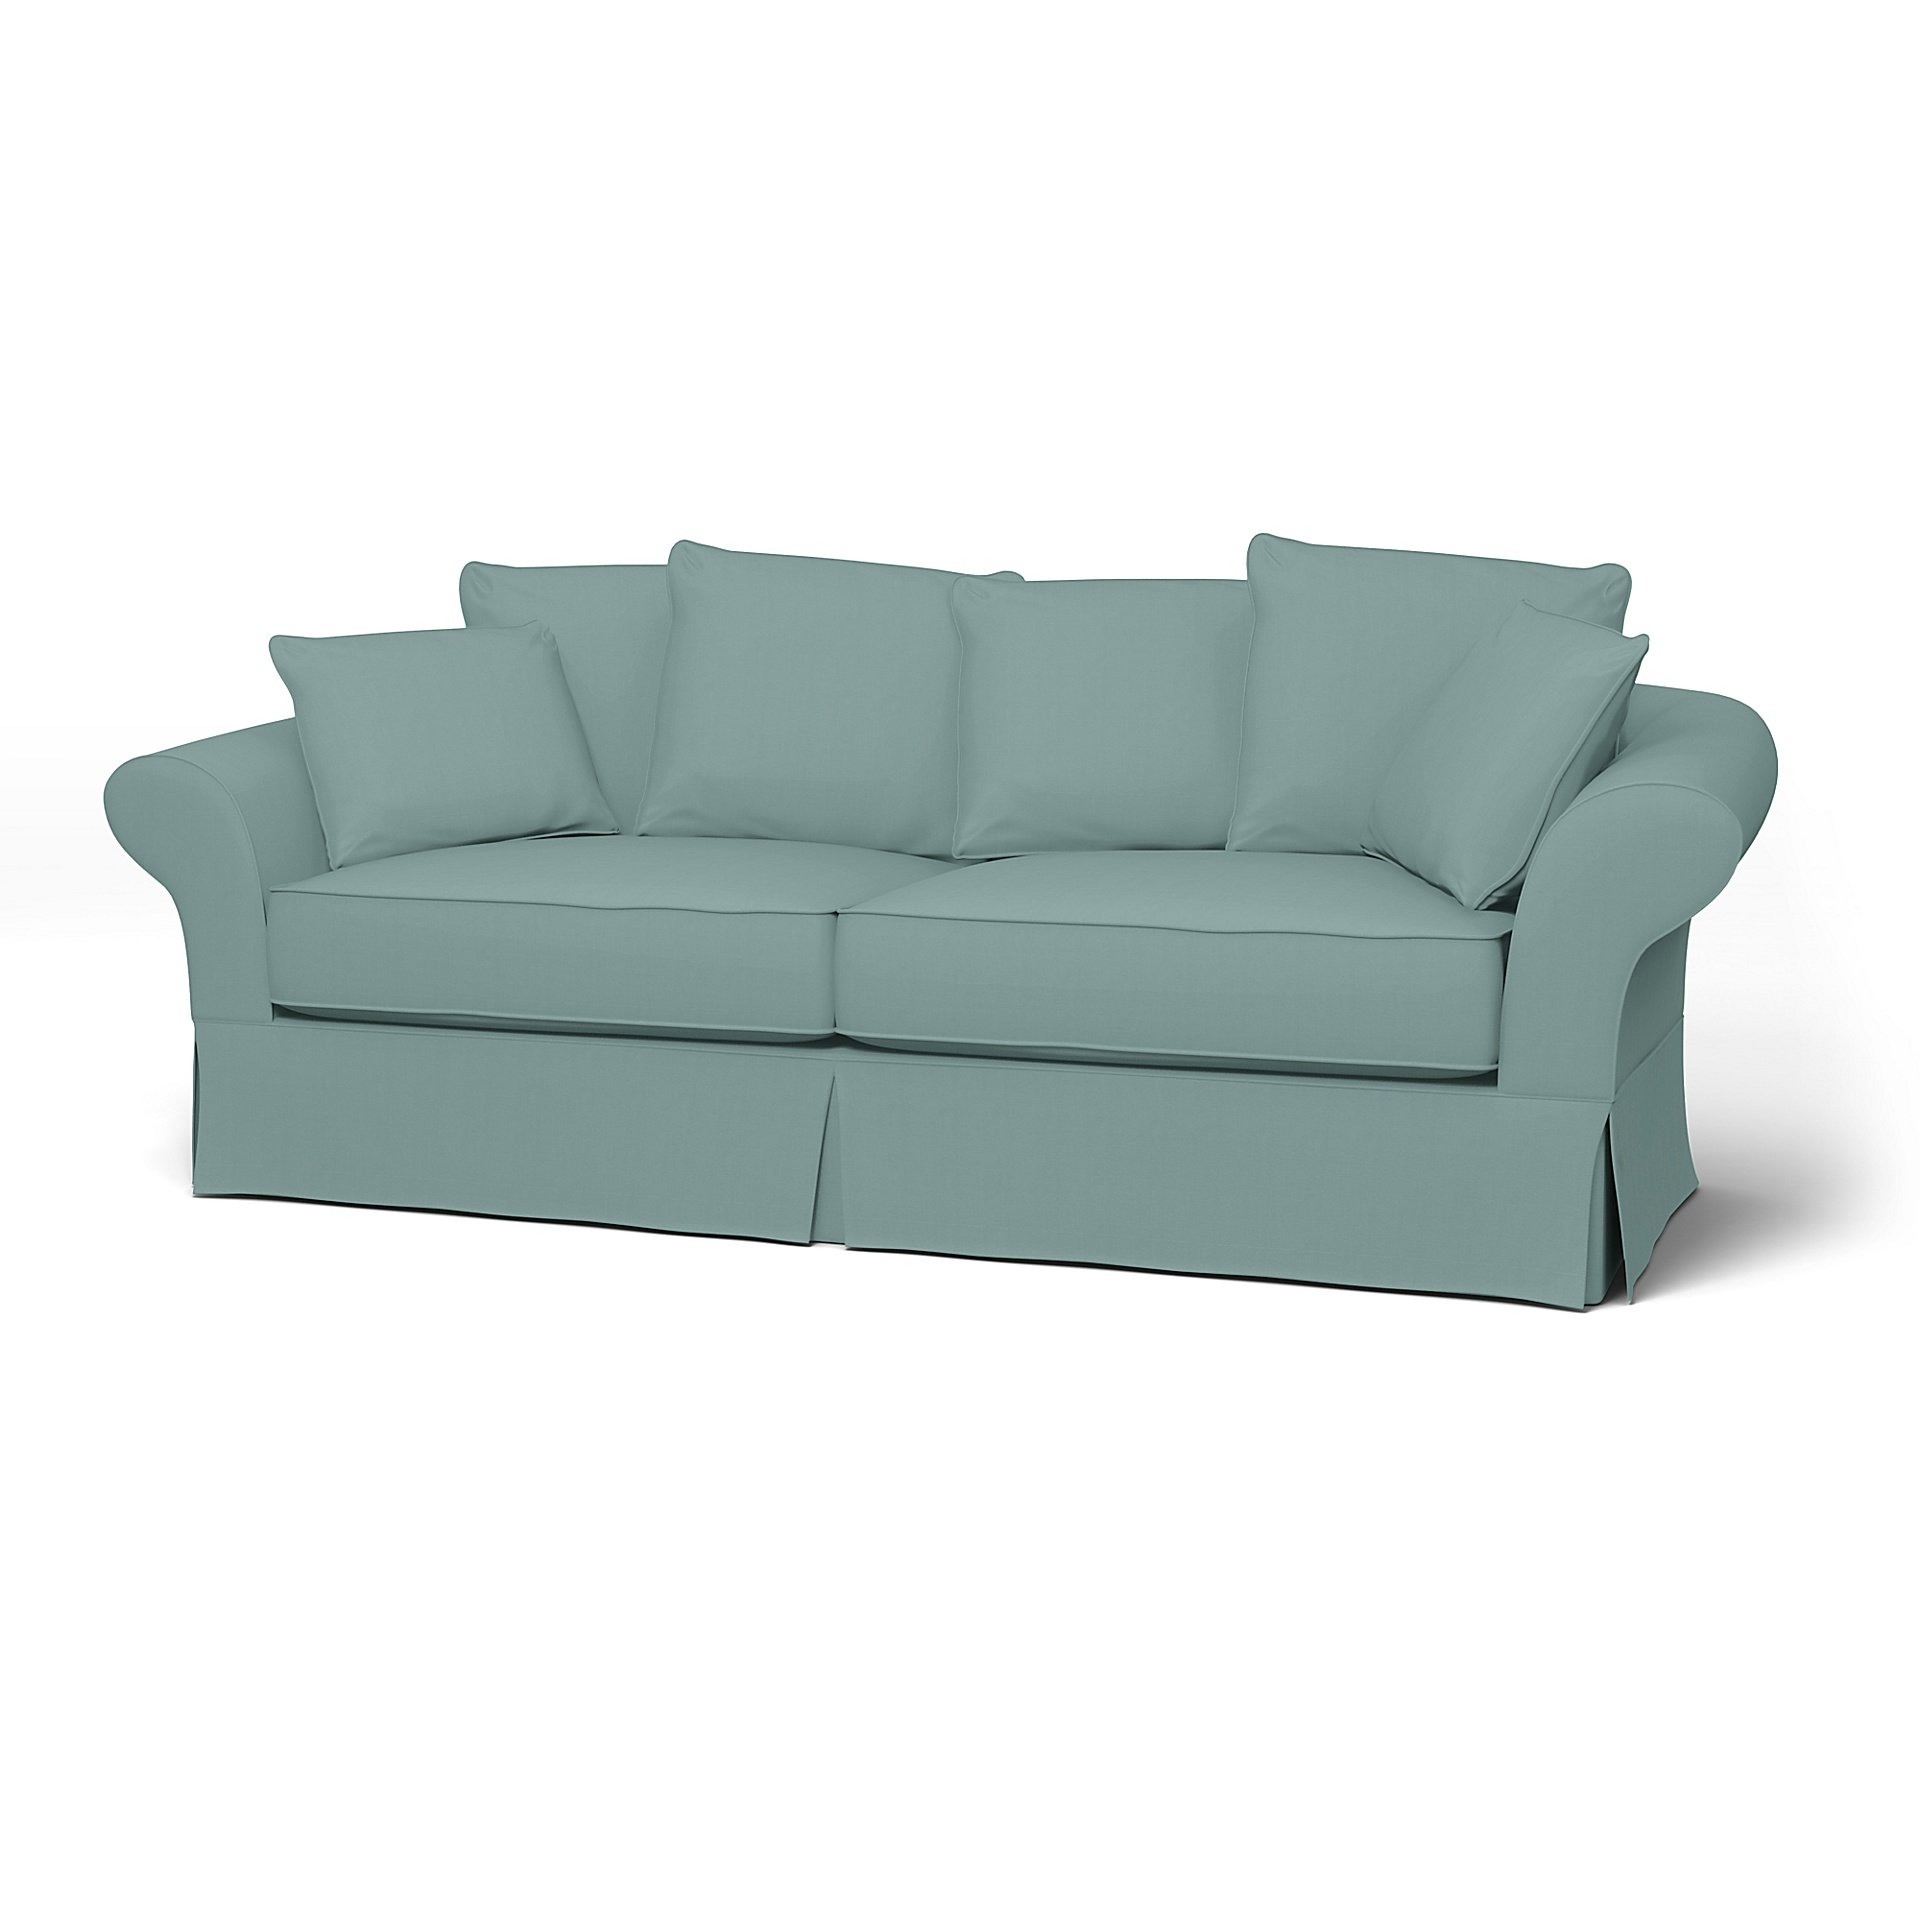 IKEA - Backamo 3 Seater Sofa Cover, Mineral Blue, Cotton - Bemz